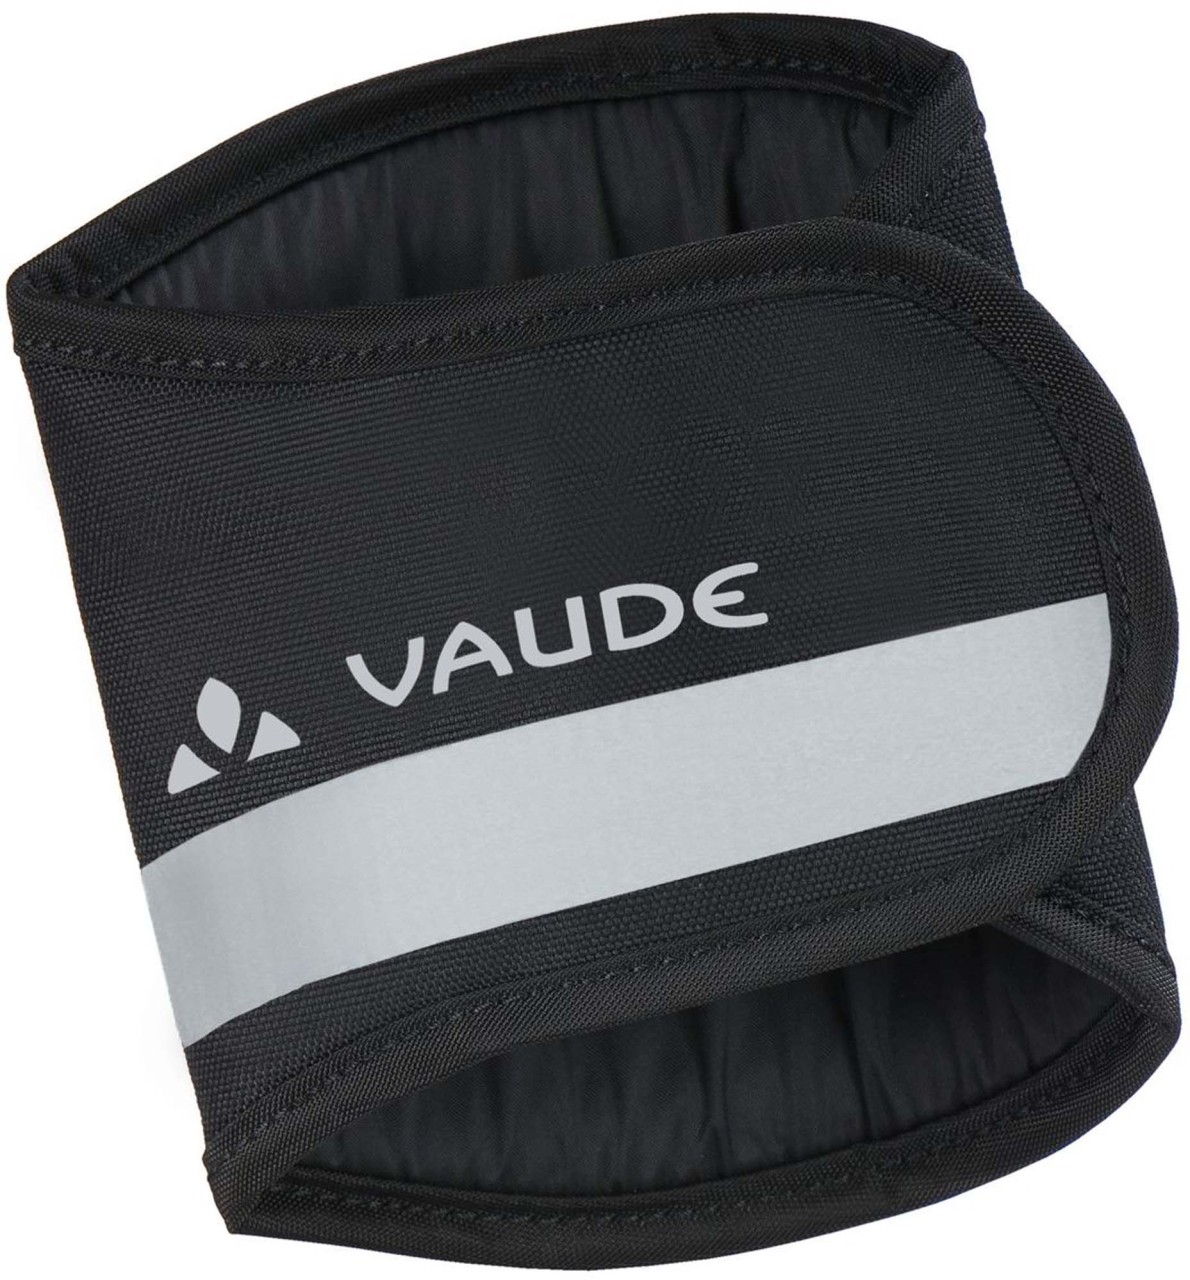 Vaude Chain Protection - Protection des pantalons